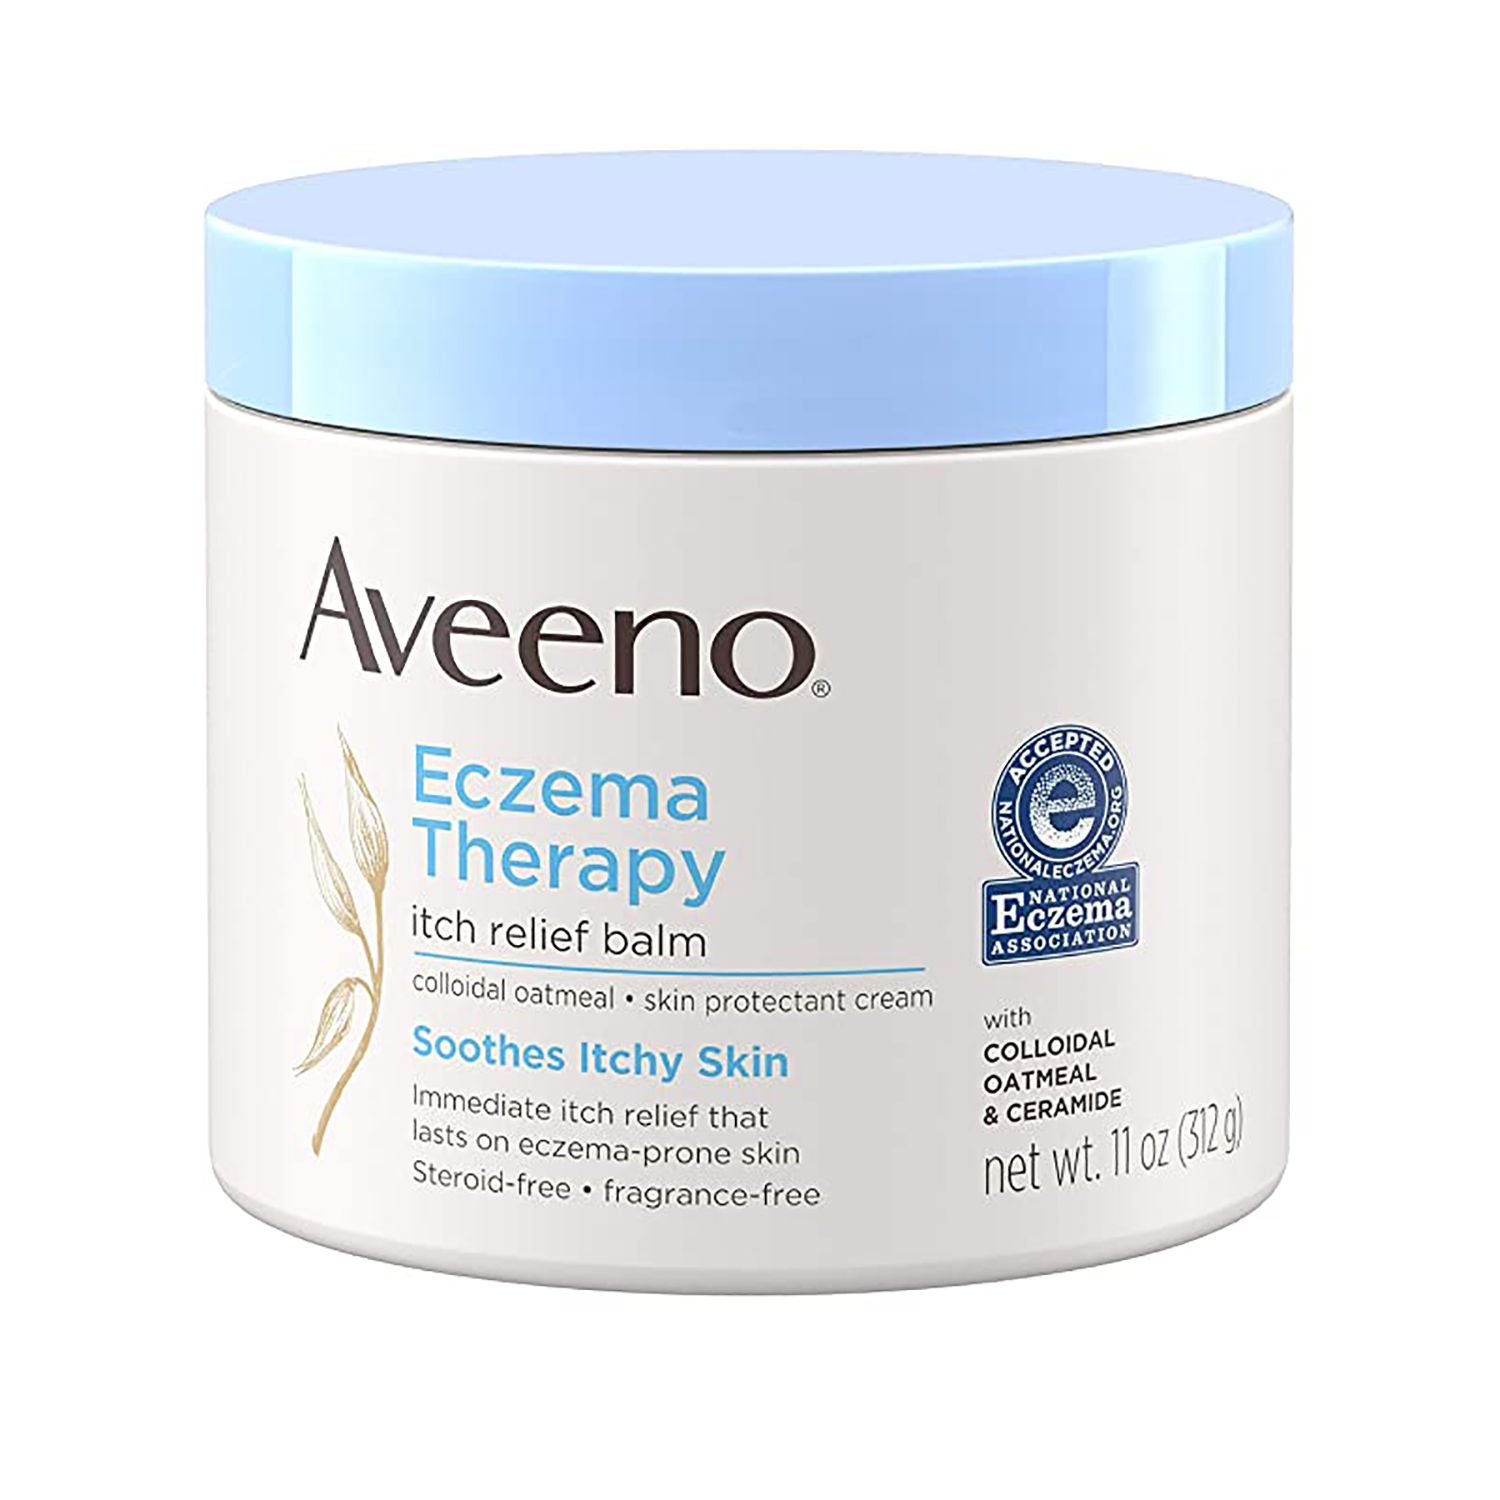 The Best Eczema Cream, According to Dermatologists ...